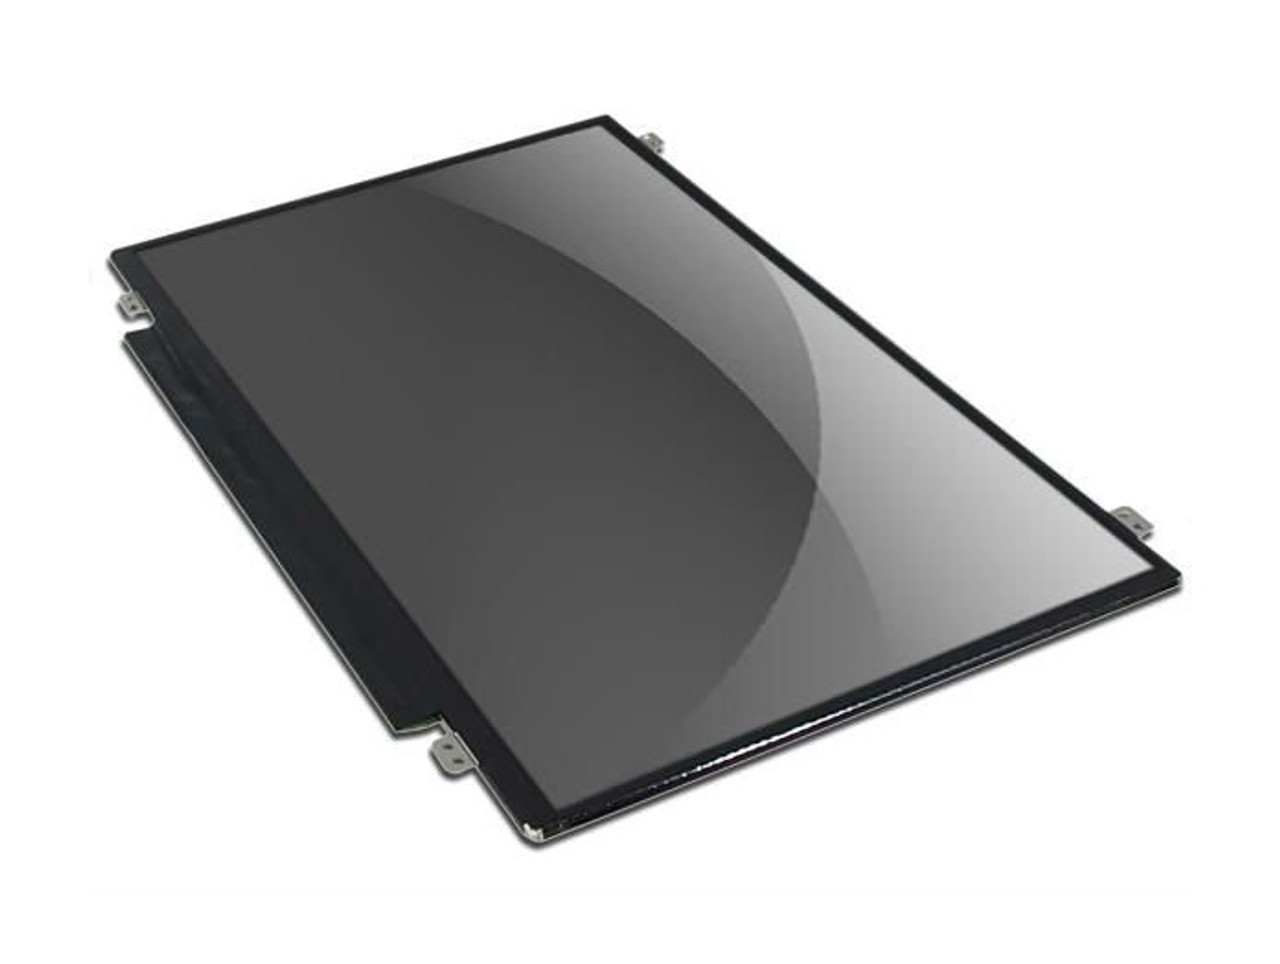 42T0371 - IBM Lenovo 14.1-inch ( 1400x1050 ) SXGA+ TFT Active Matrix LCD Panel for ThinkPad